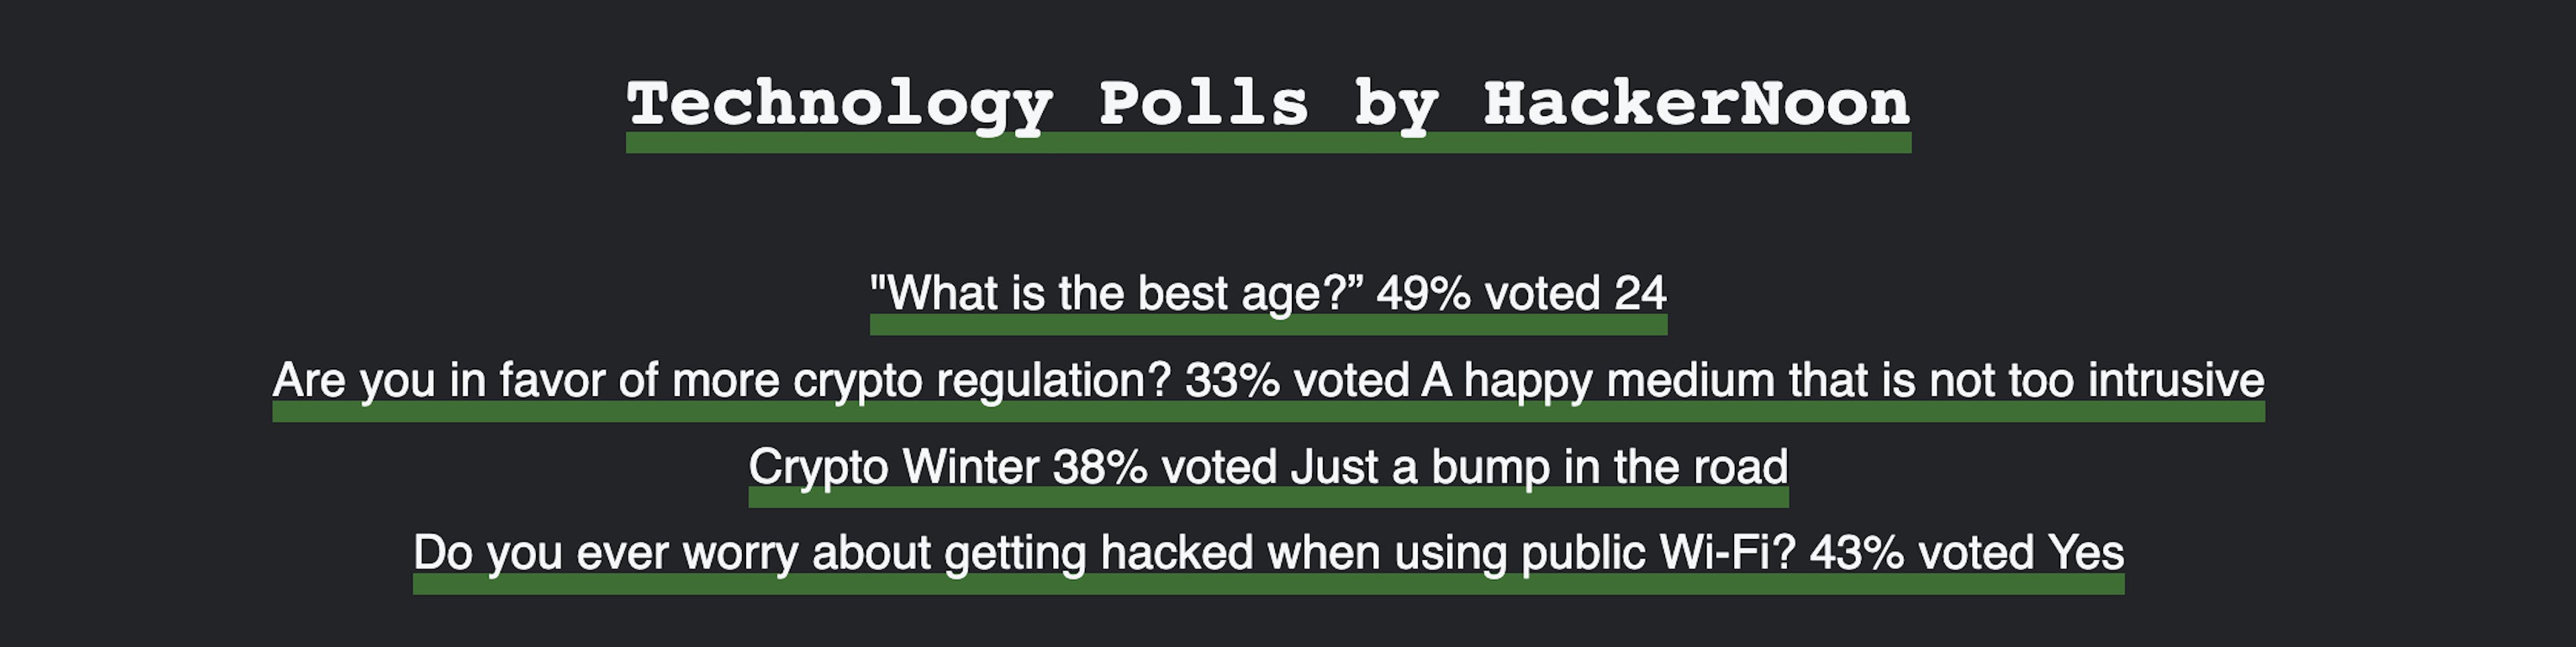 HackerNoon Polls Results